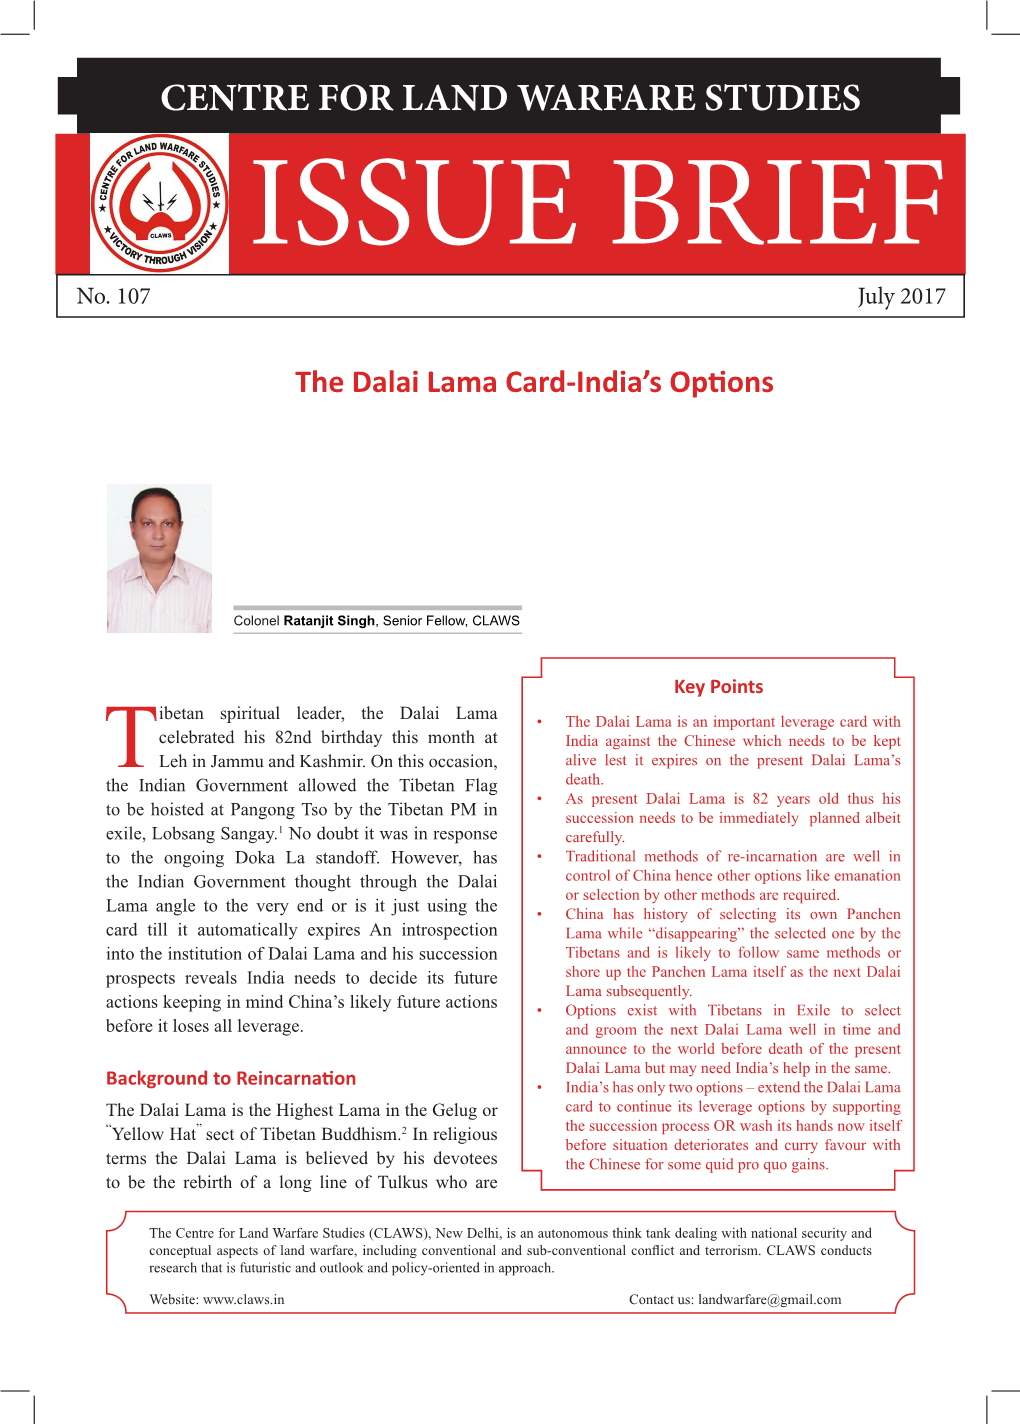 The Dalai Lama Card-India's Options